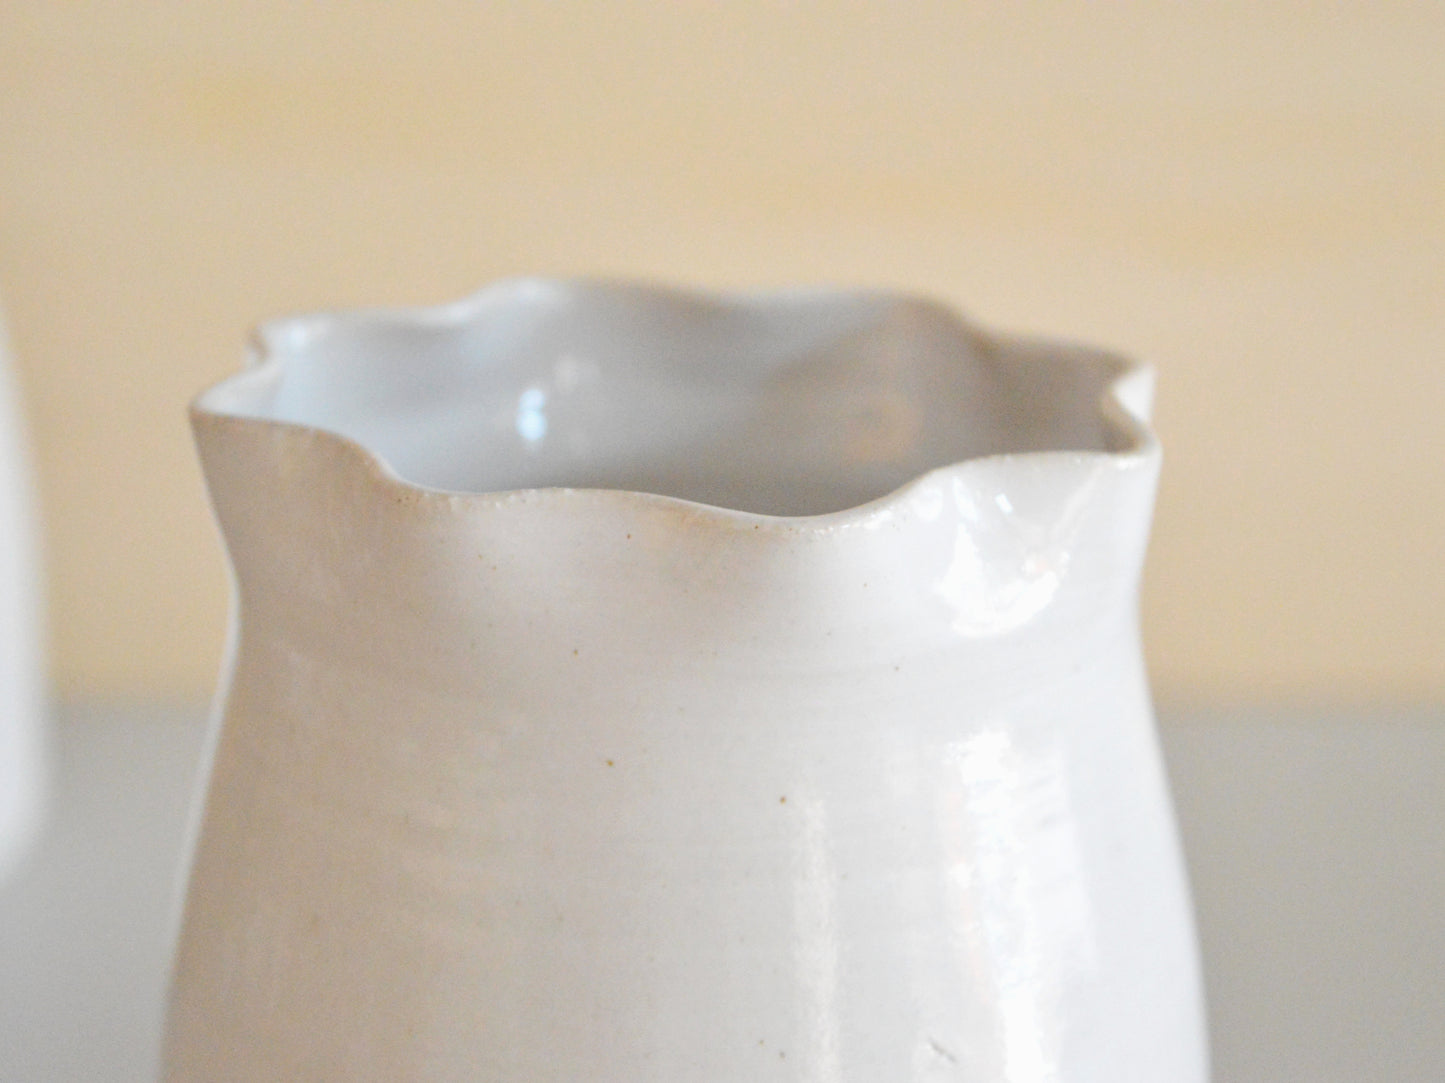 FIORE Vaso Decorativo in Ceramica